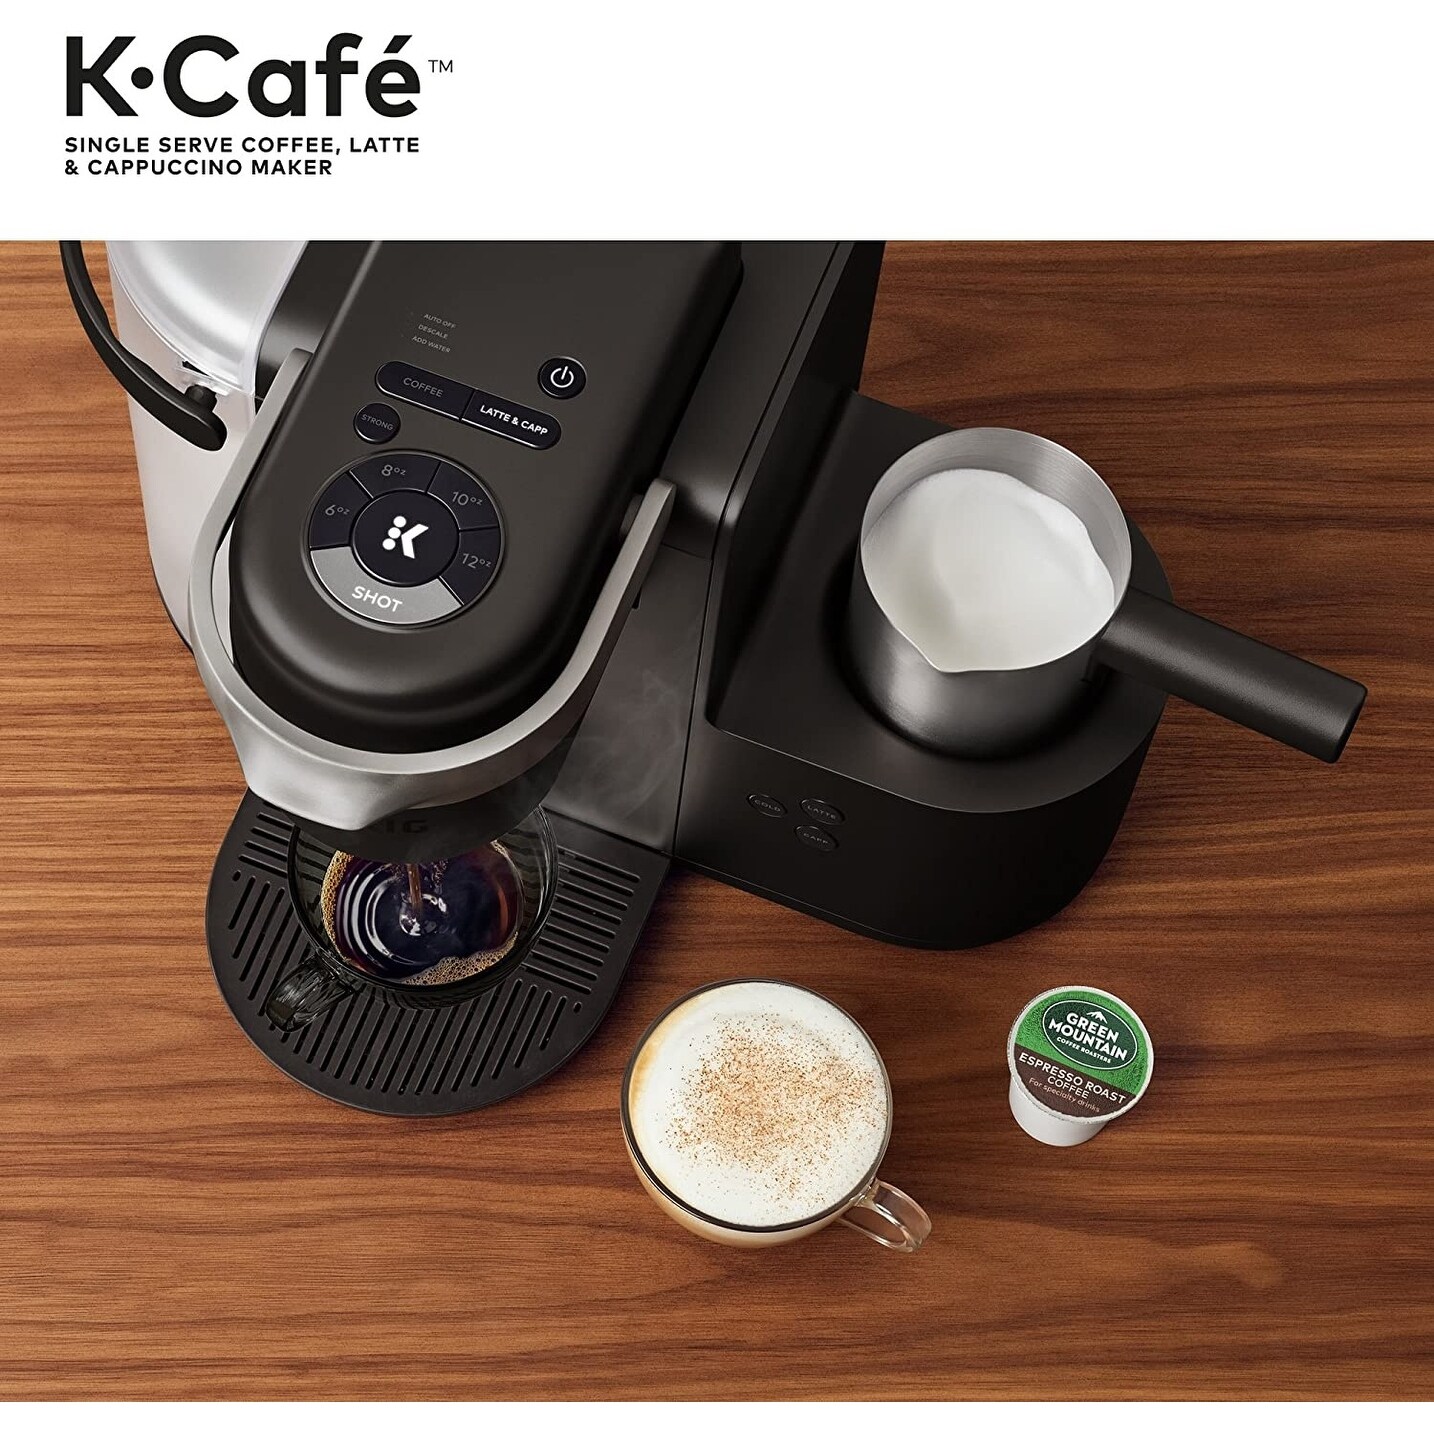 Keurig K-Cafe SMART Single-Serve Coffee, Latte & Cappuccino Maker